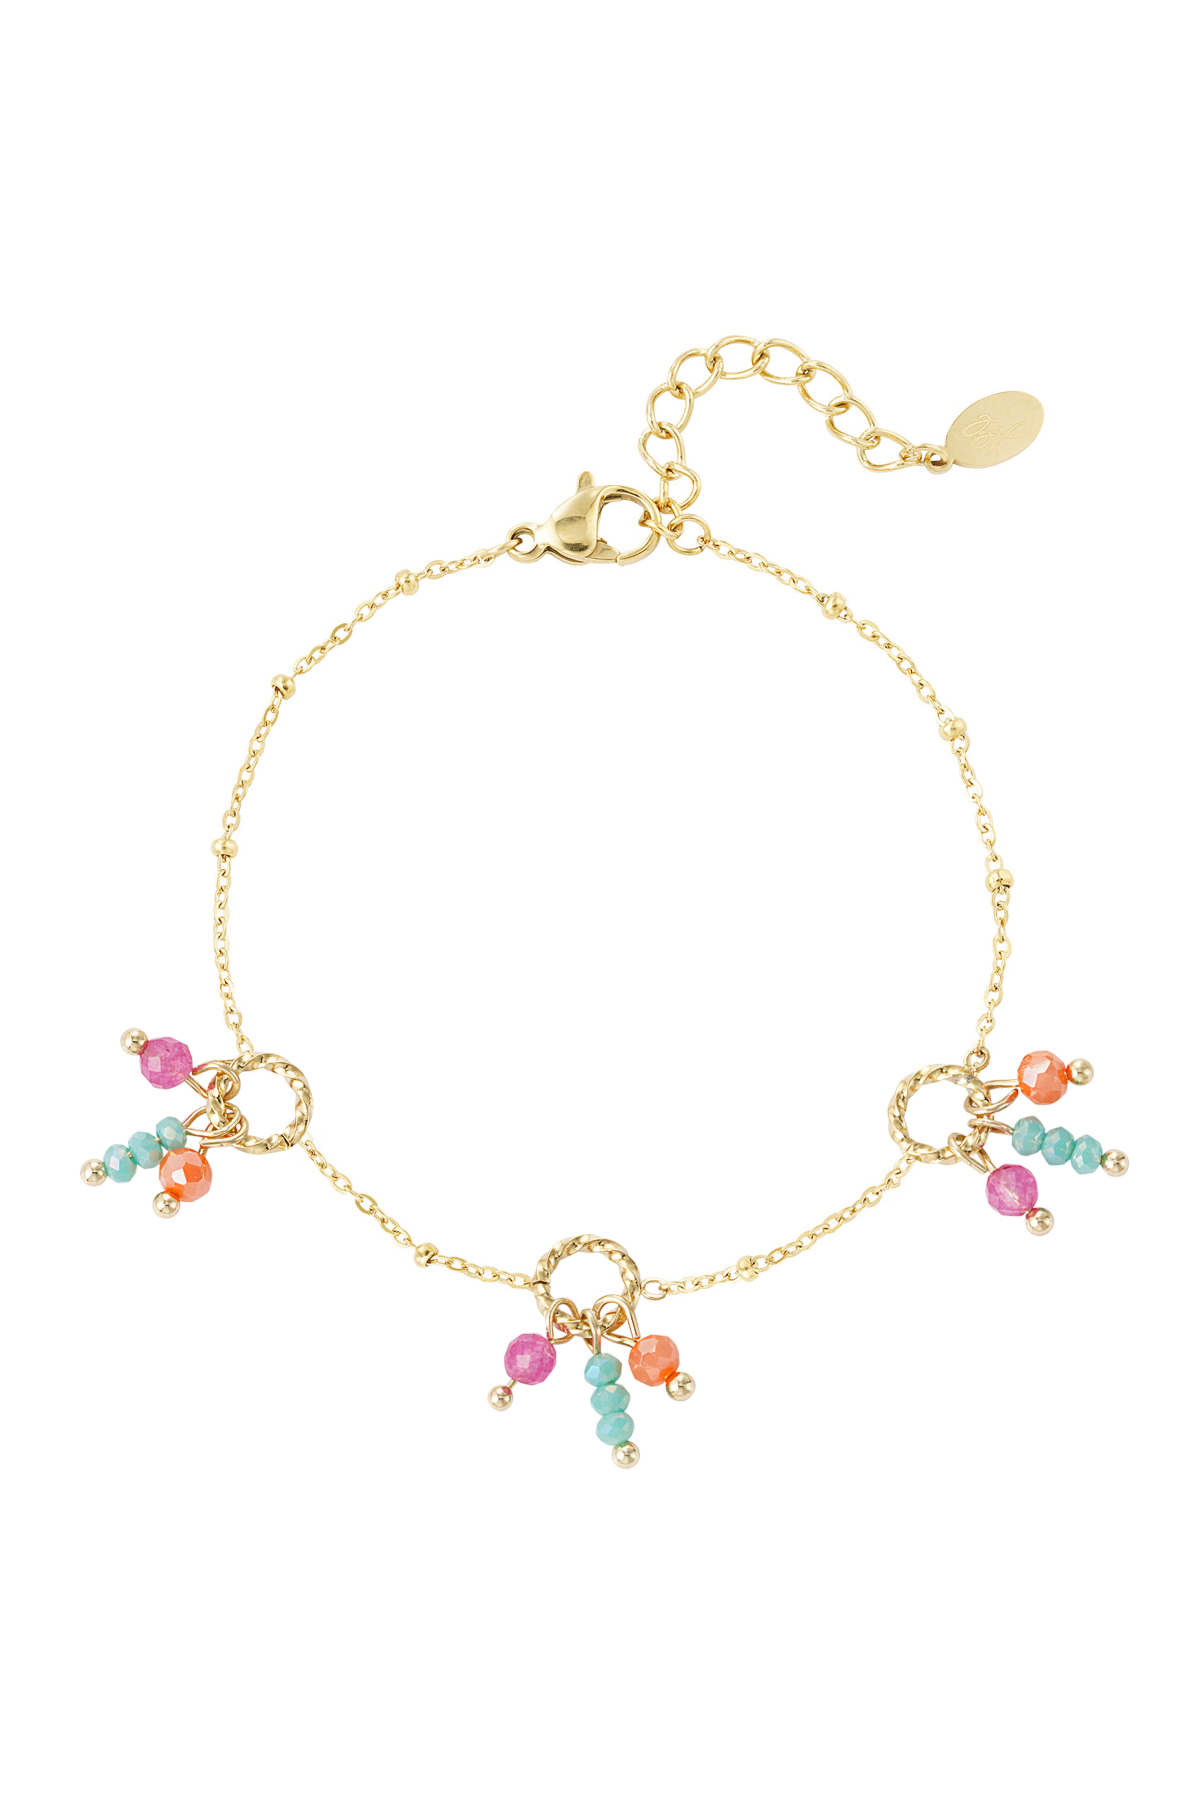 Bracelet colorful fiesta - gold